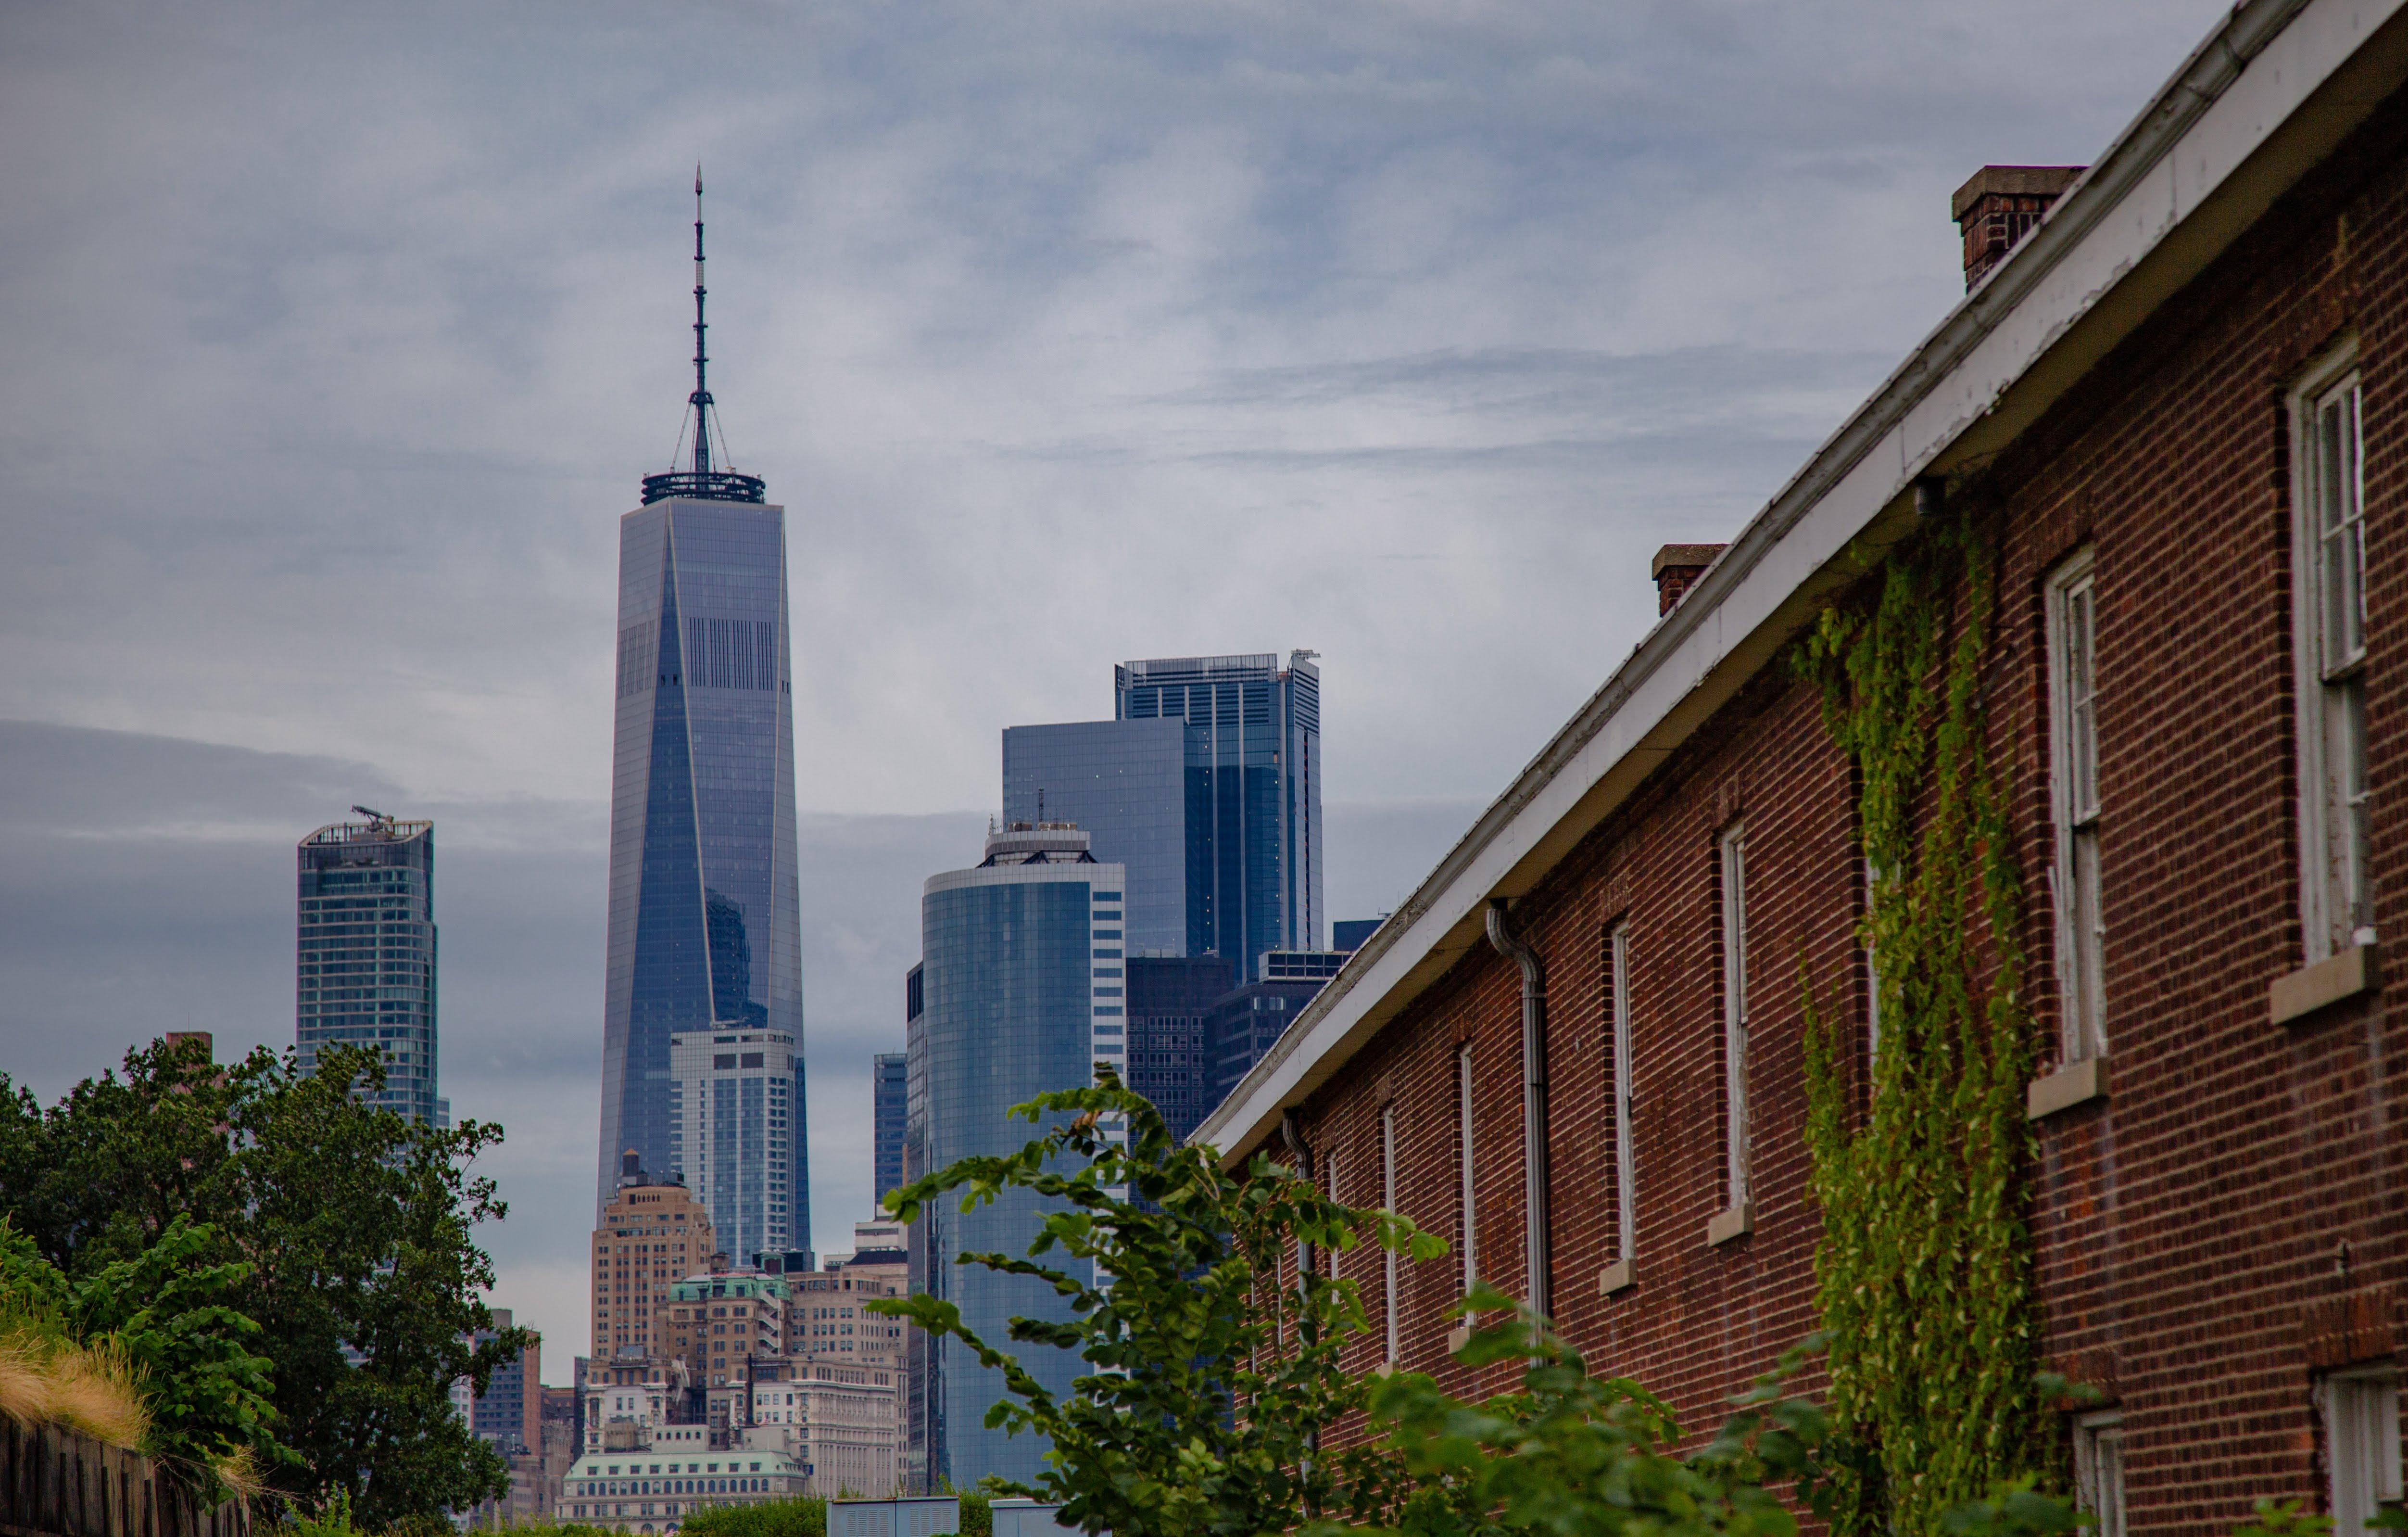 Manhattan Skyline stands behind the barracks of Fort Jay